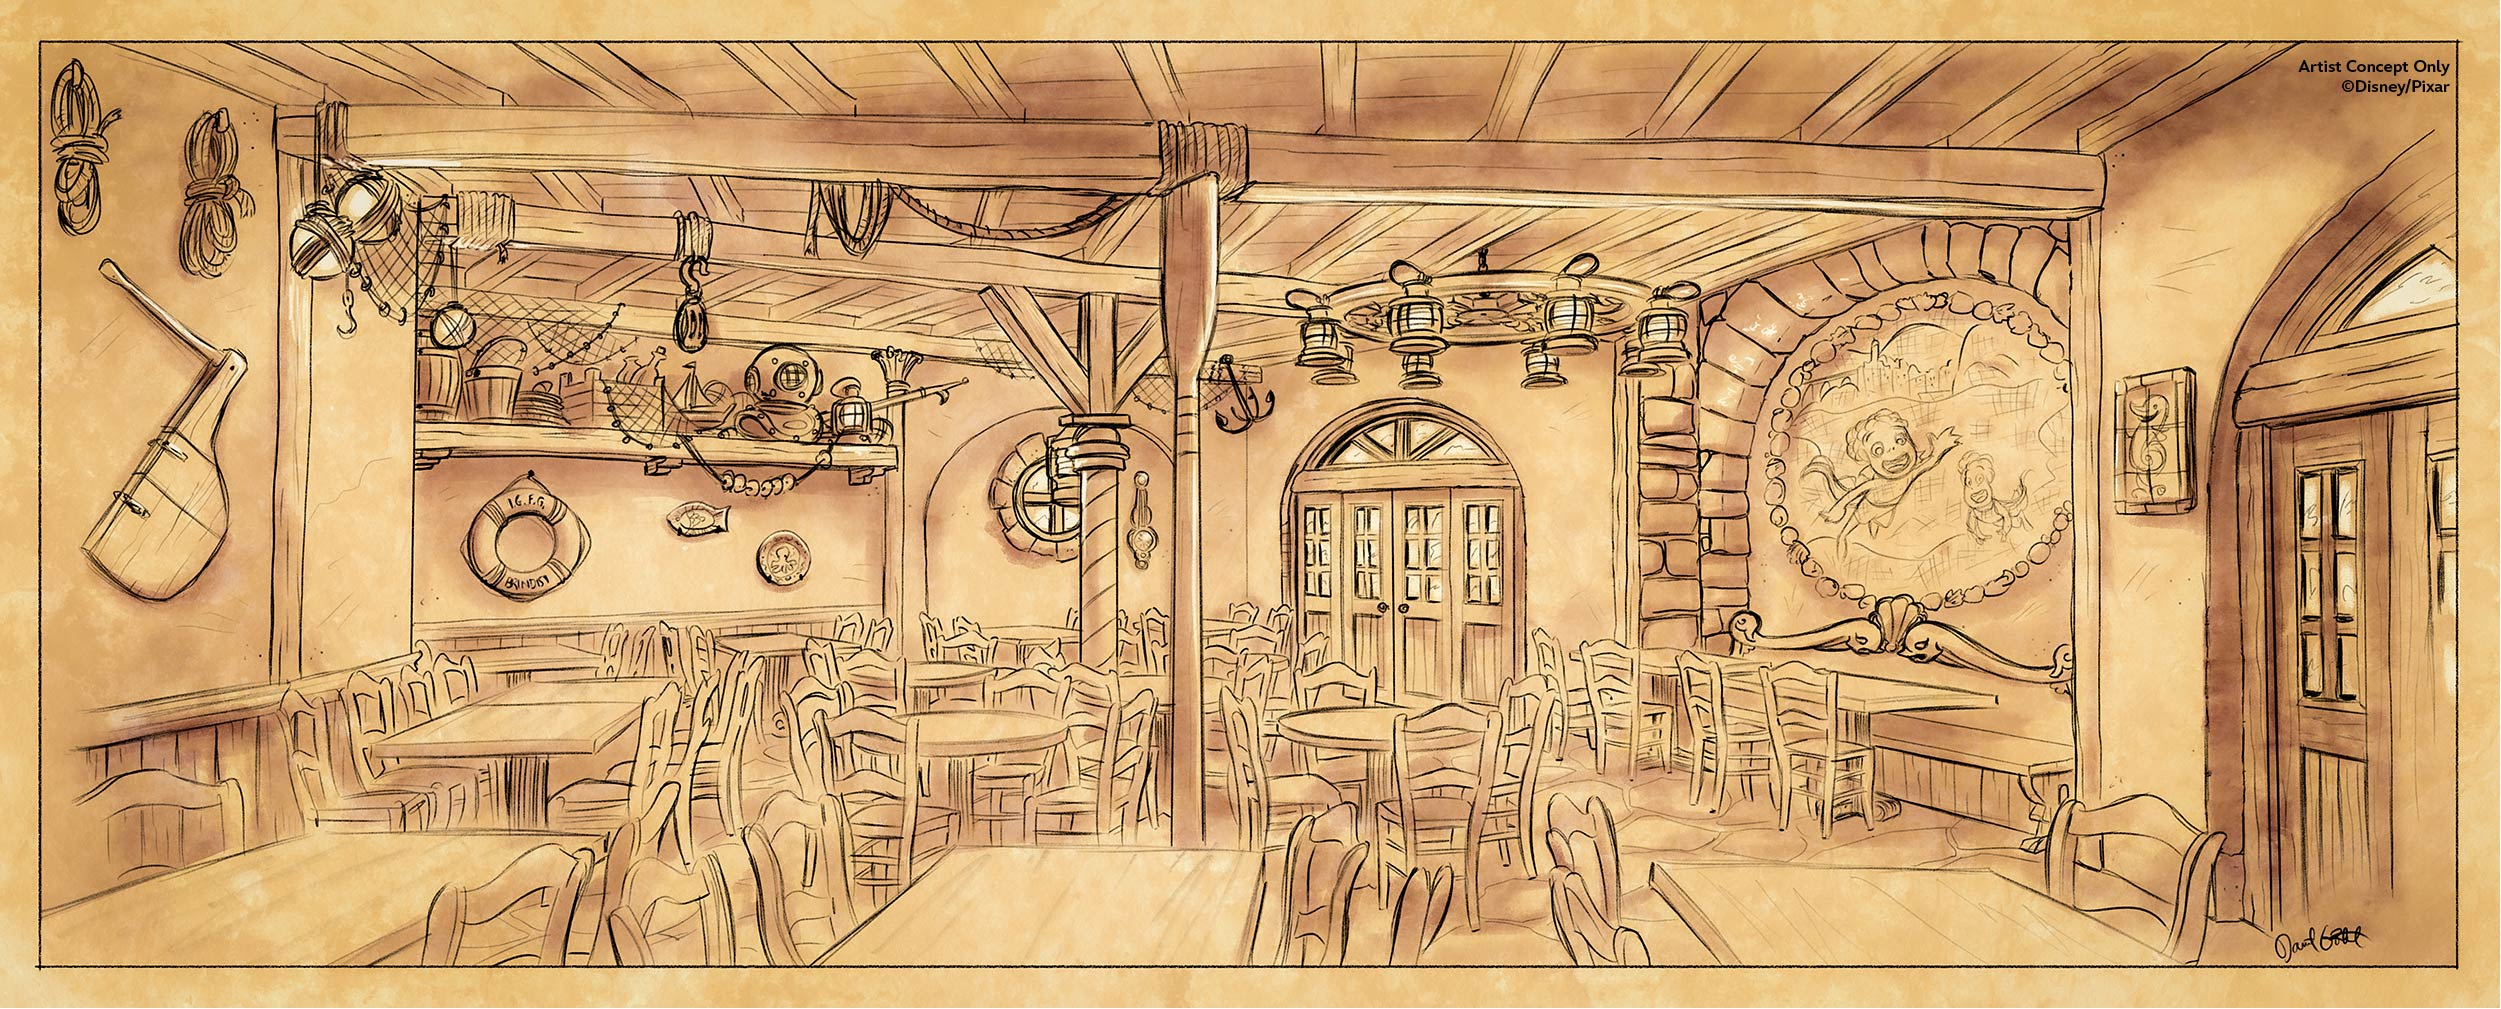 New Luca Inspired Restaurant Area coming to Disneyland Paris